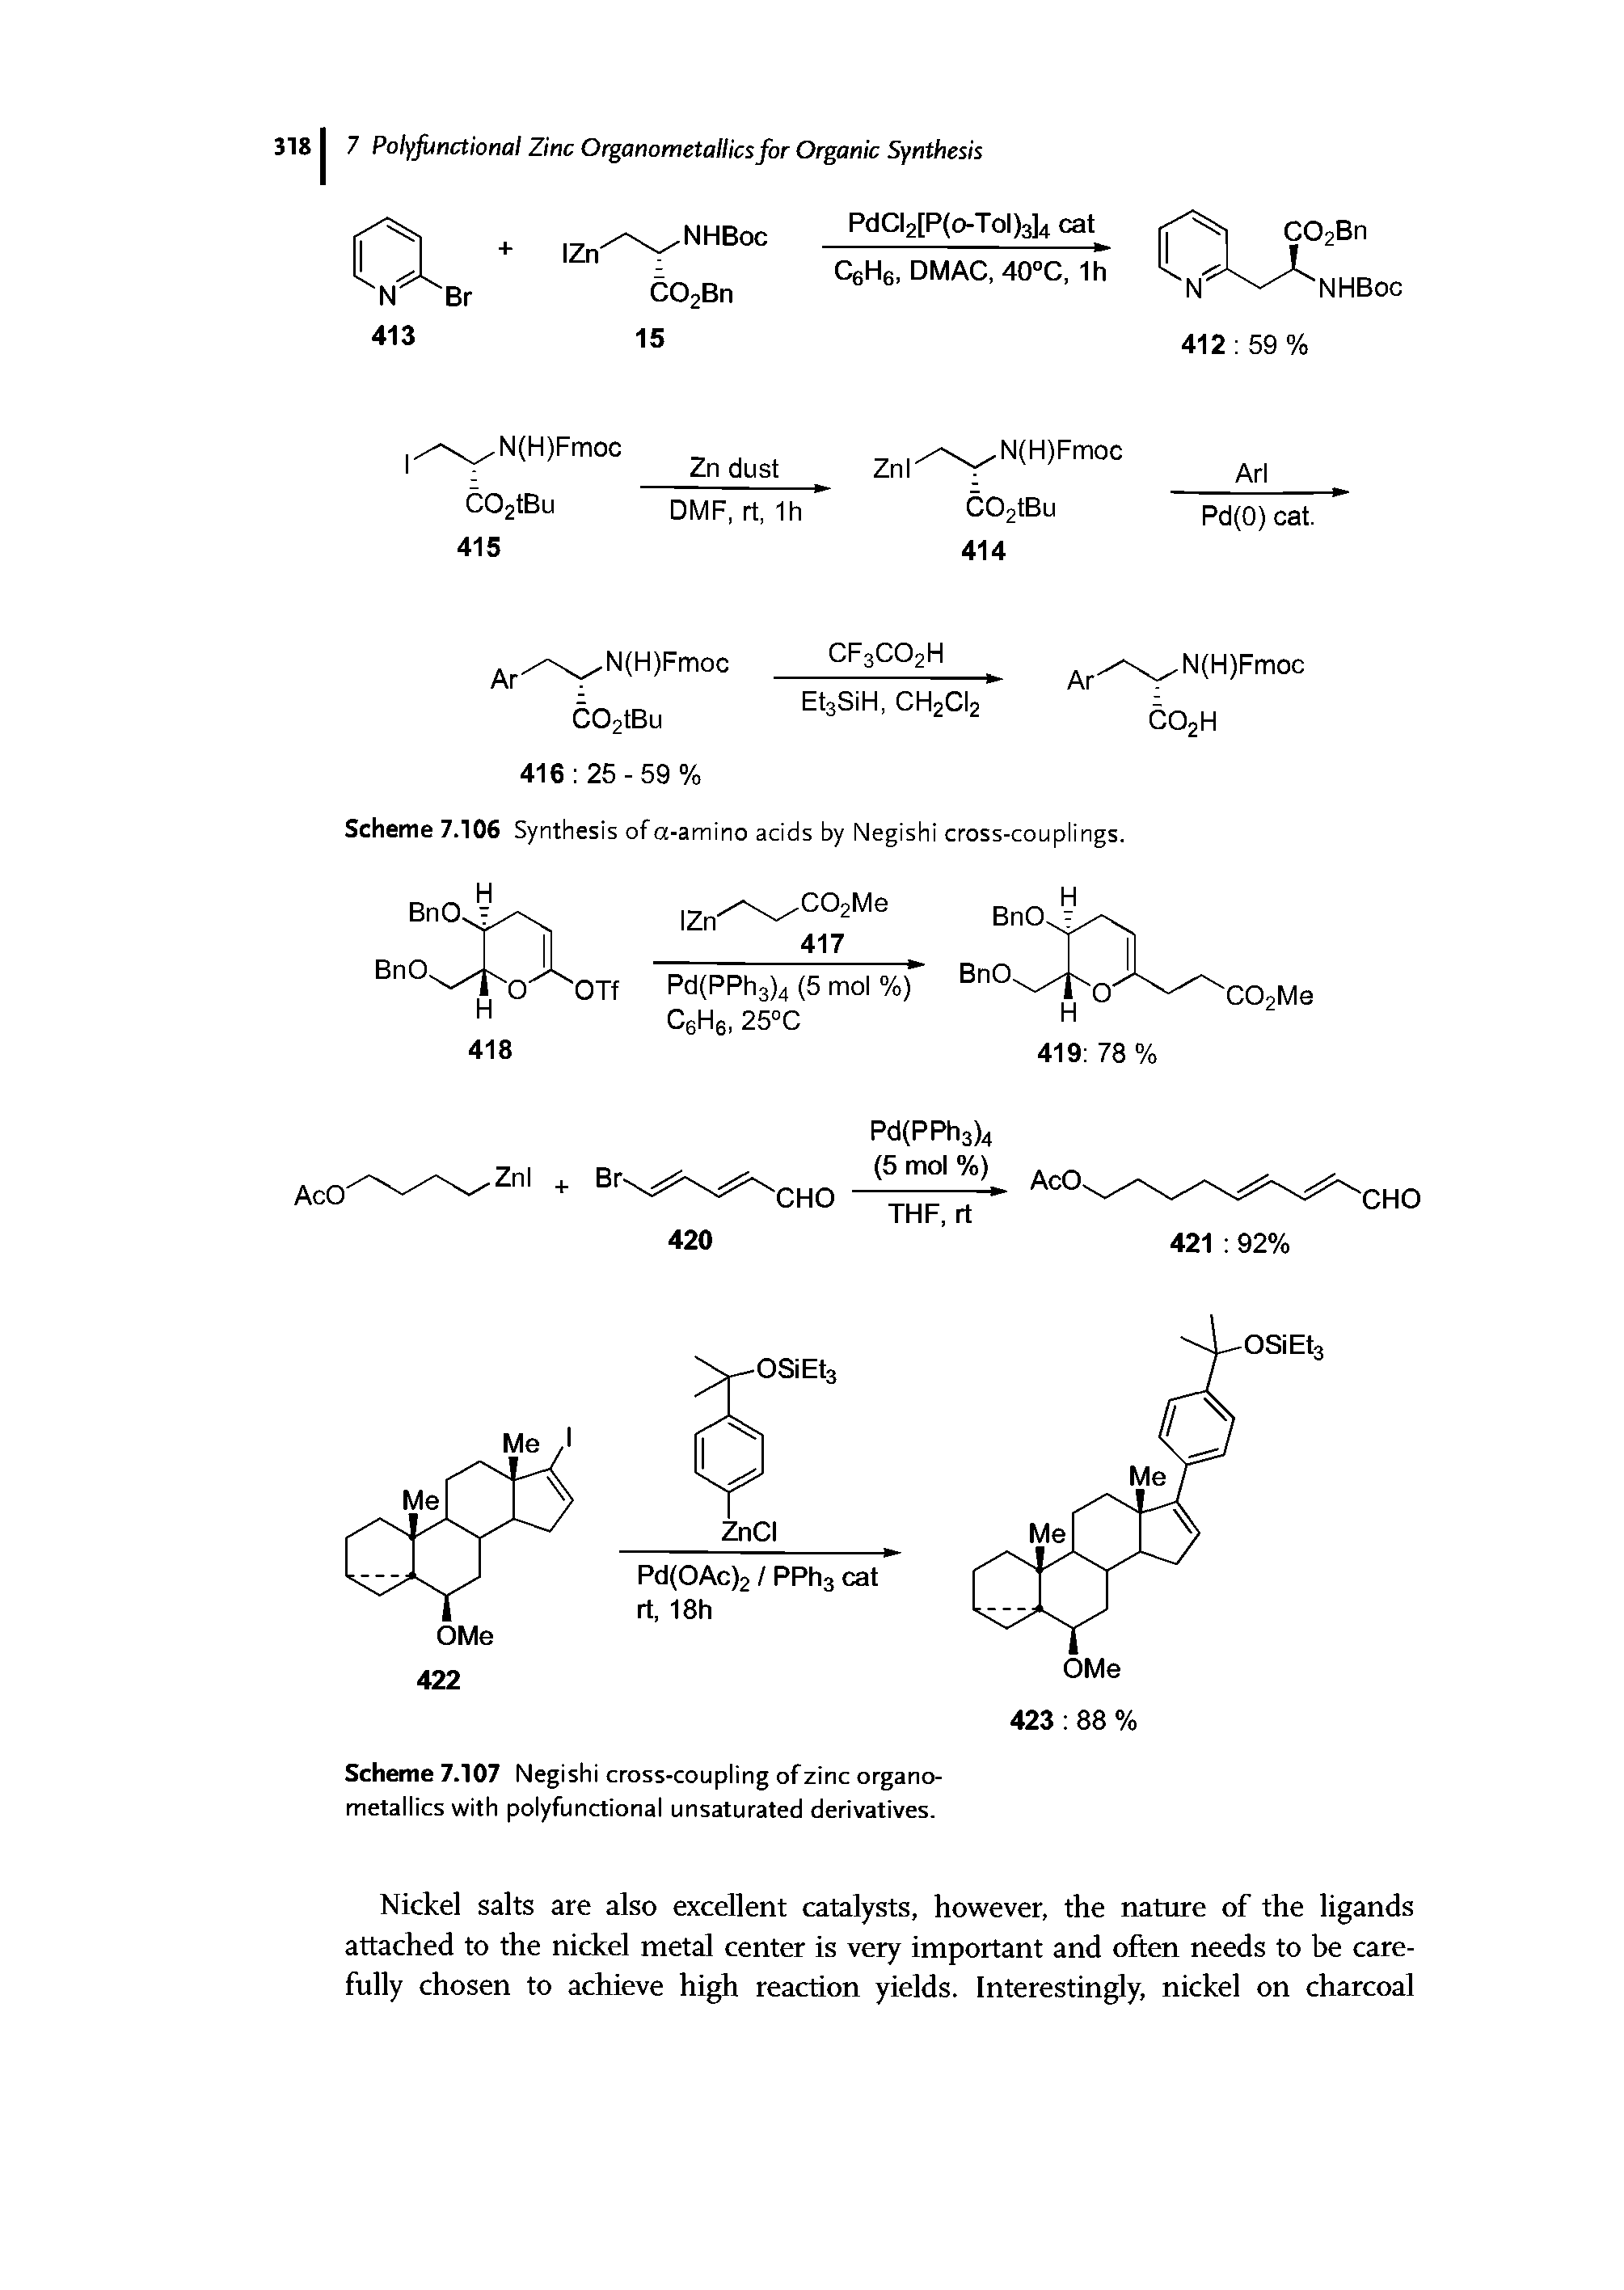 Scheme 7.107 Negishi cross-coupling of zinc organo-metallics with polyfunctional unsaturated derivatives.